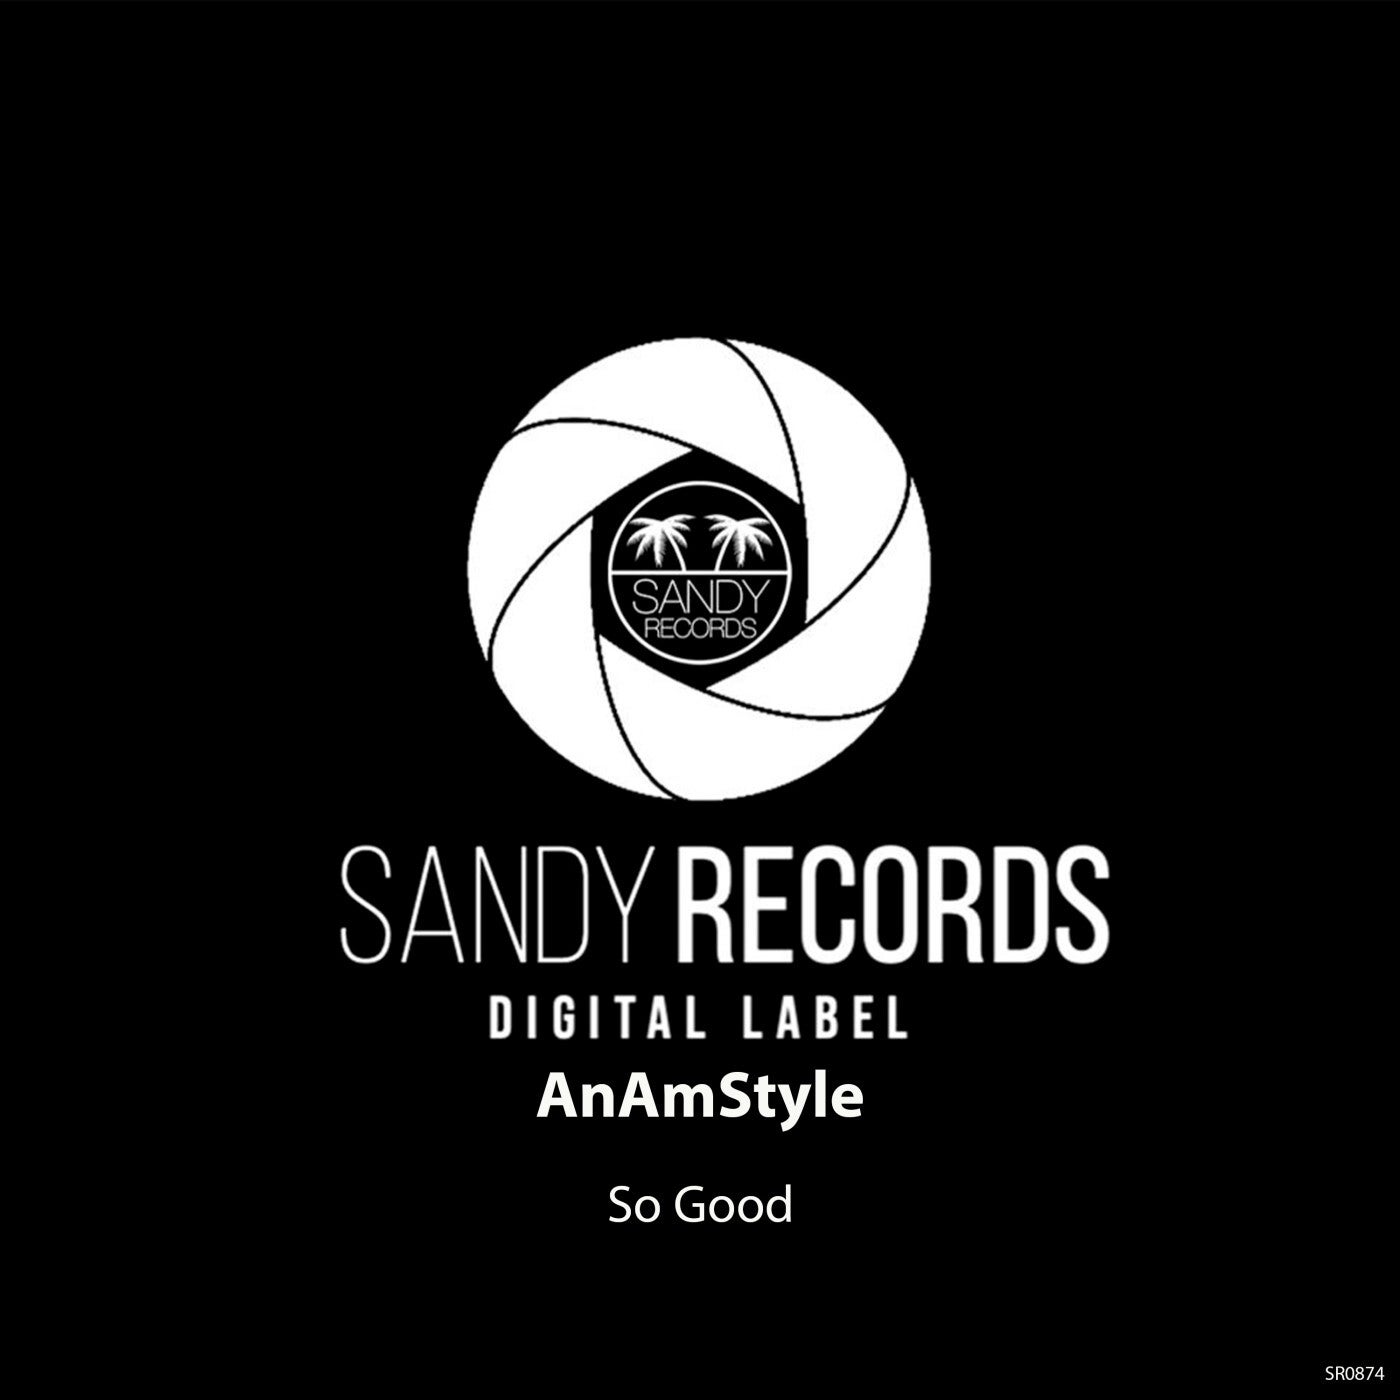 AnAmStyle – So Good [SR0874]